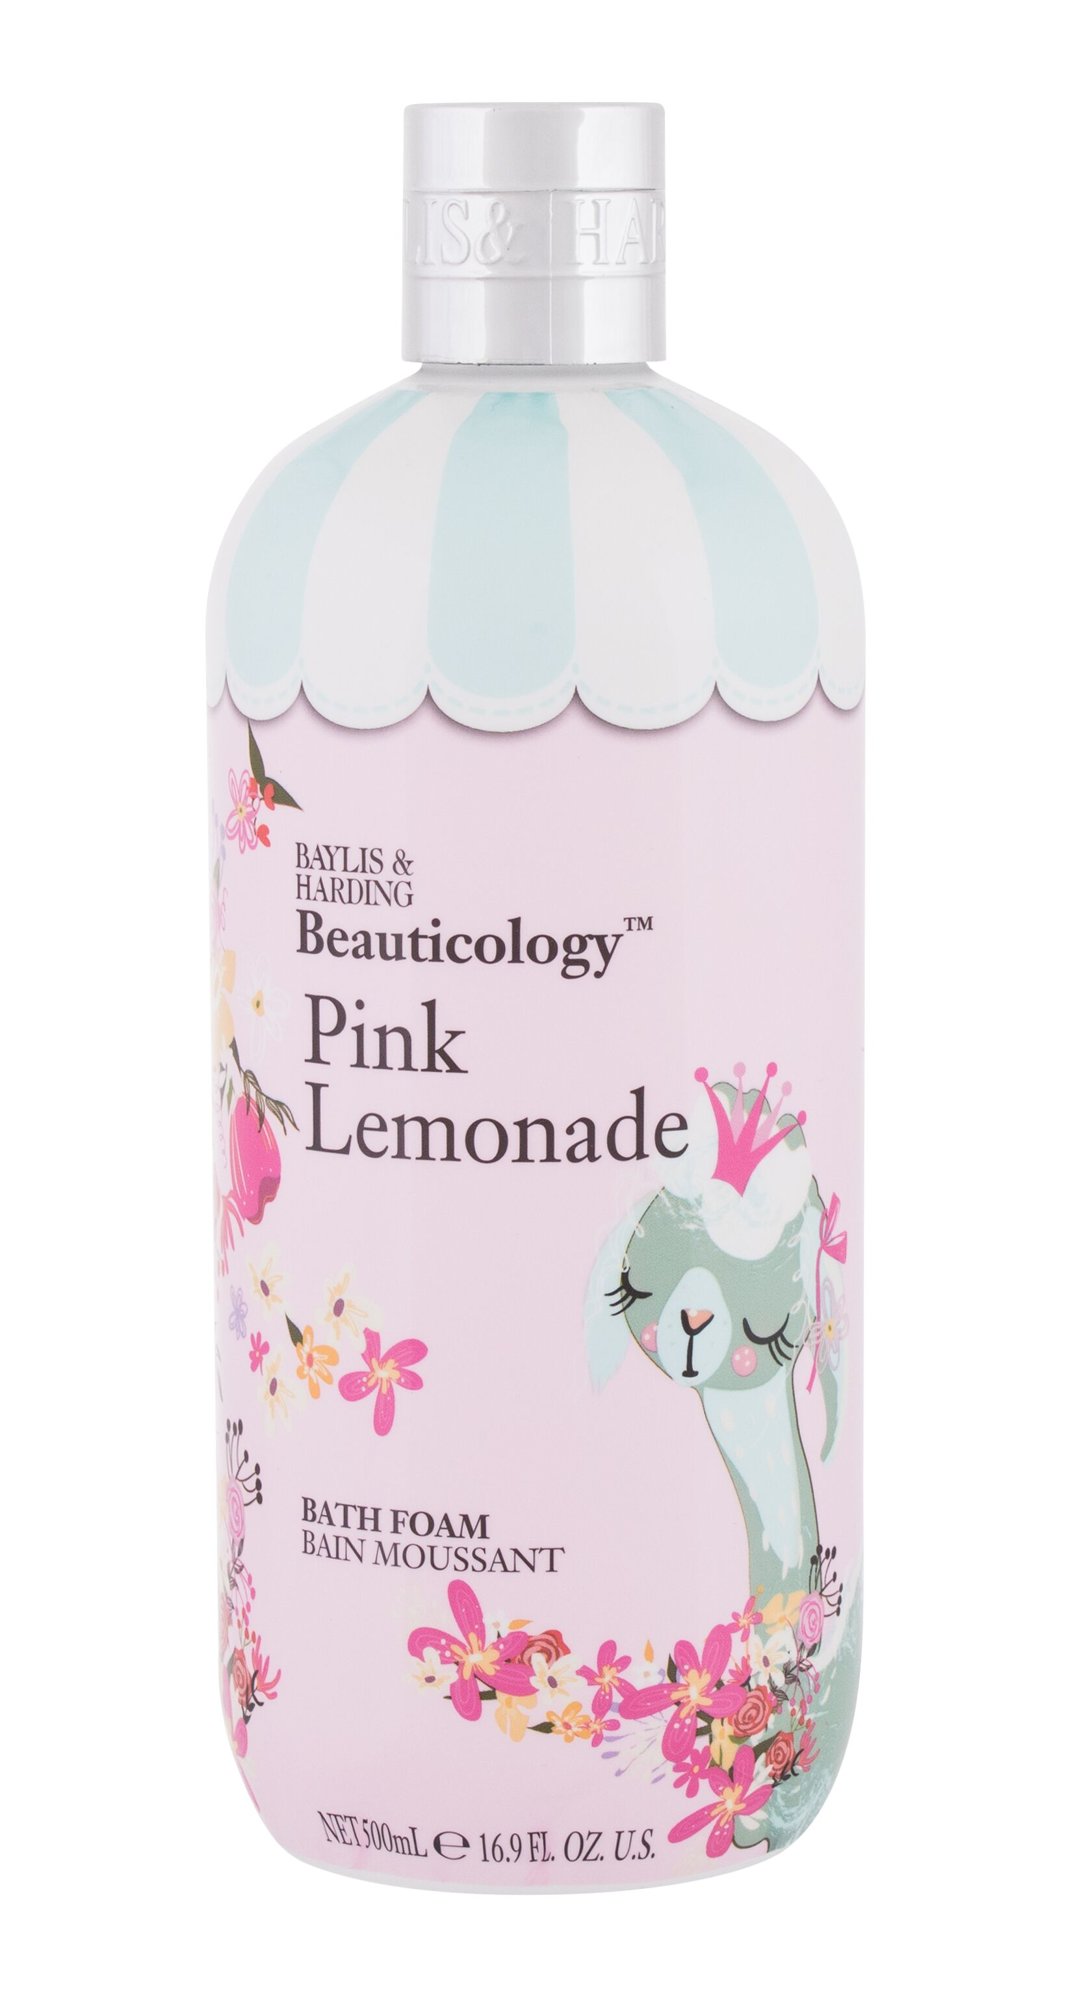 Baylis & Harding Beauticology Pink Lemonade vonios putos